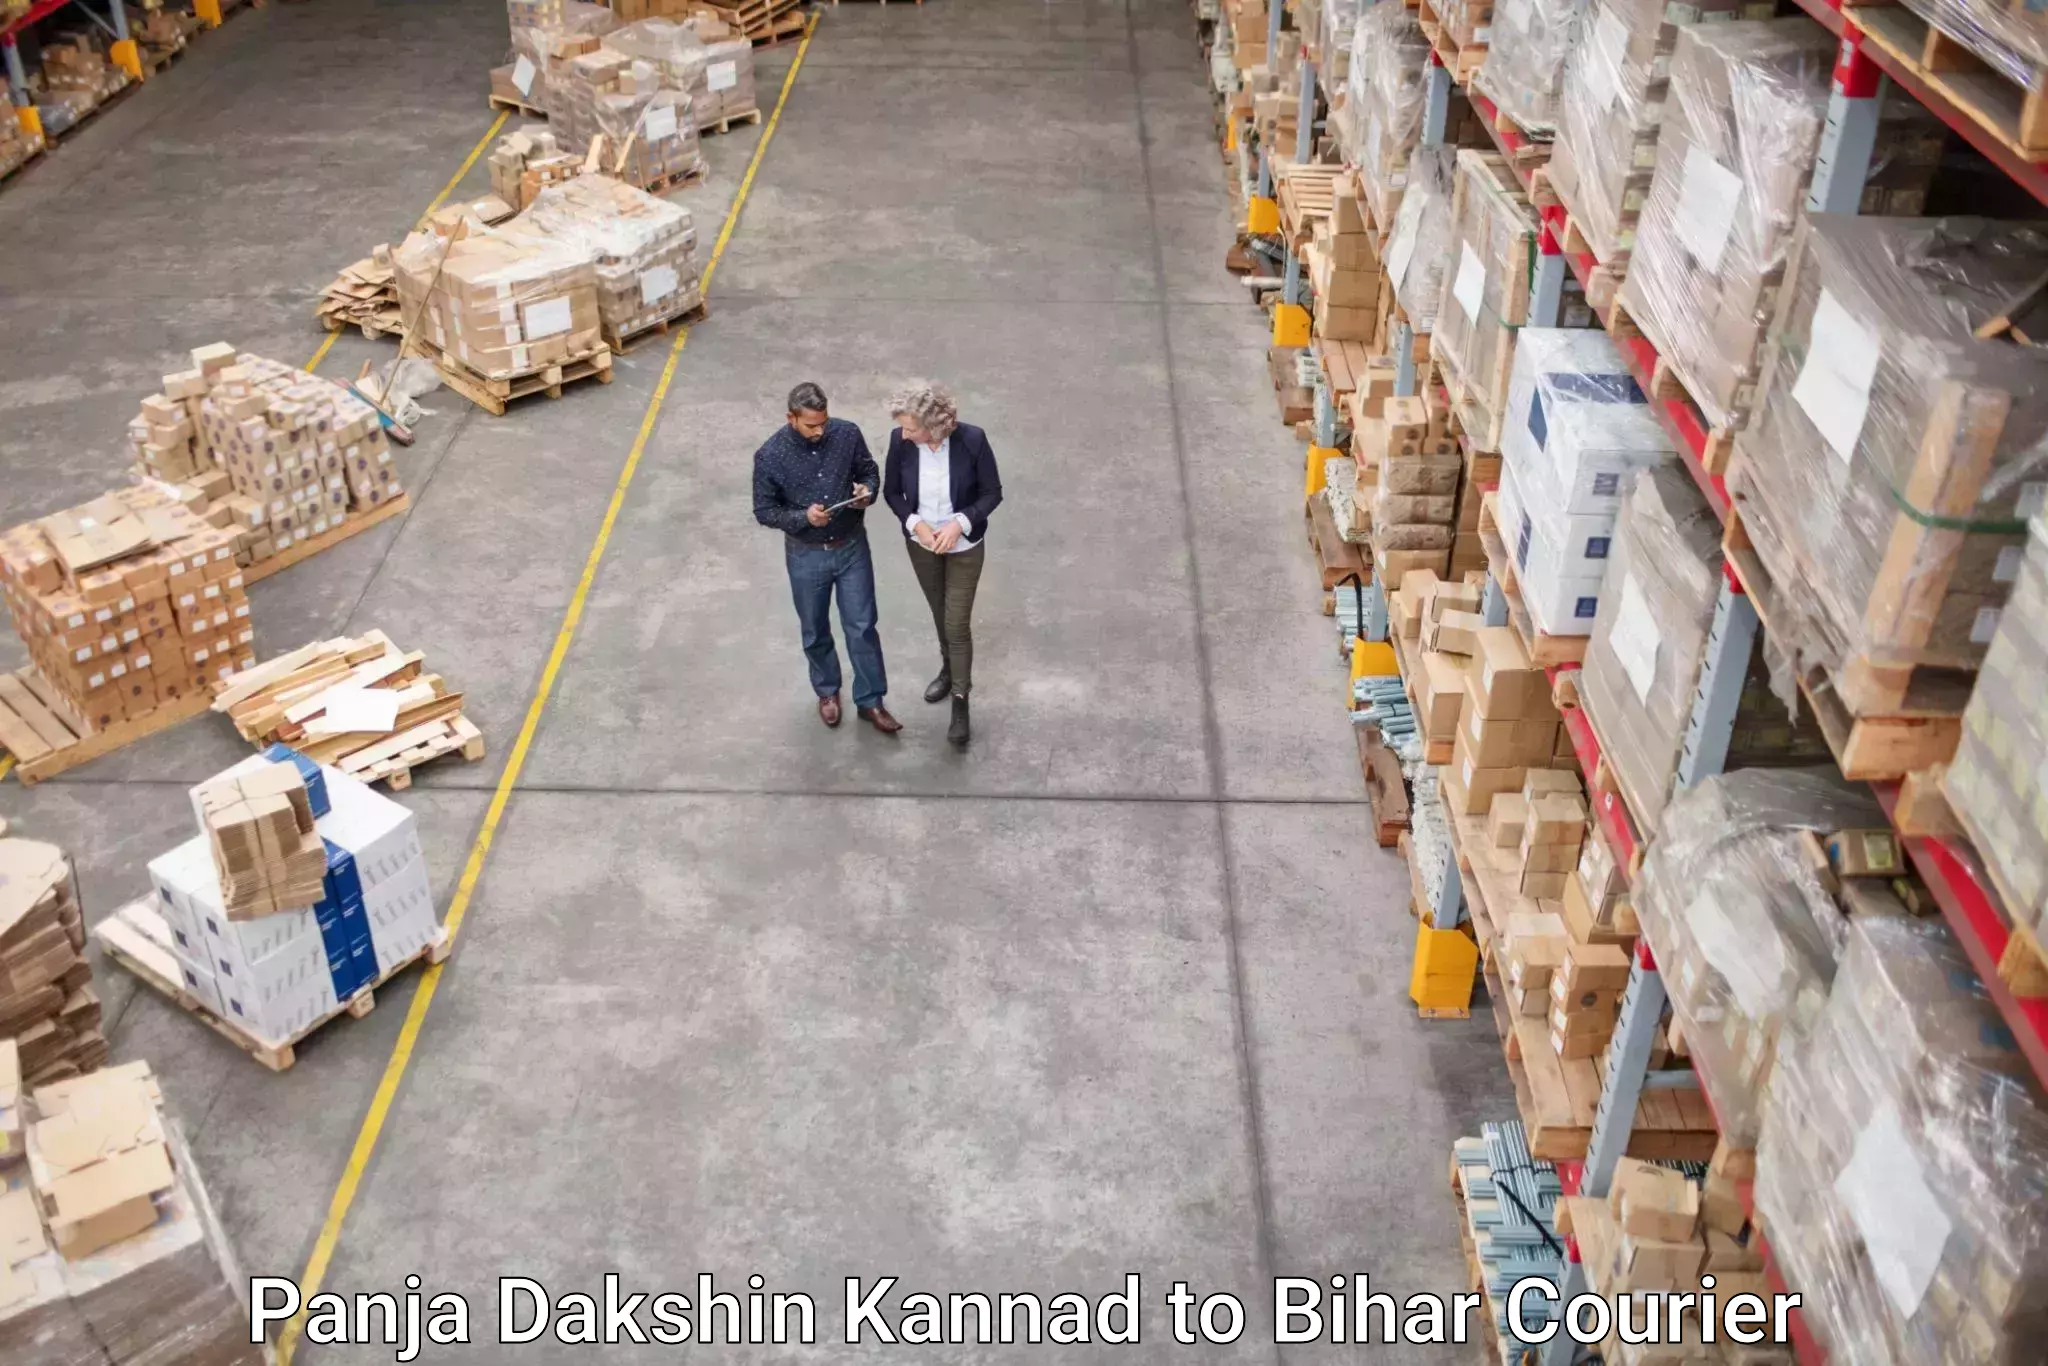 Flexible delivery scheduling Panja Dakshin Kannad to Bihar